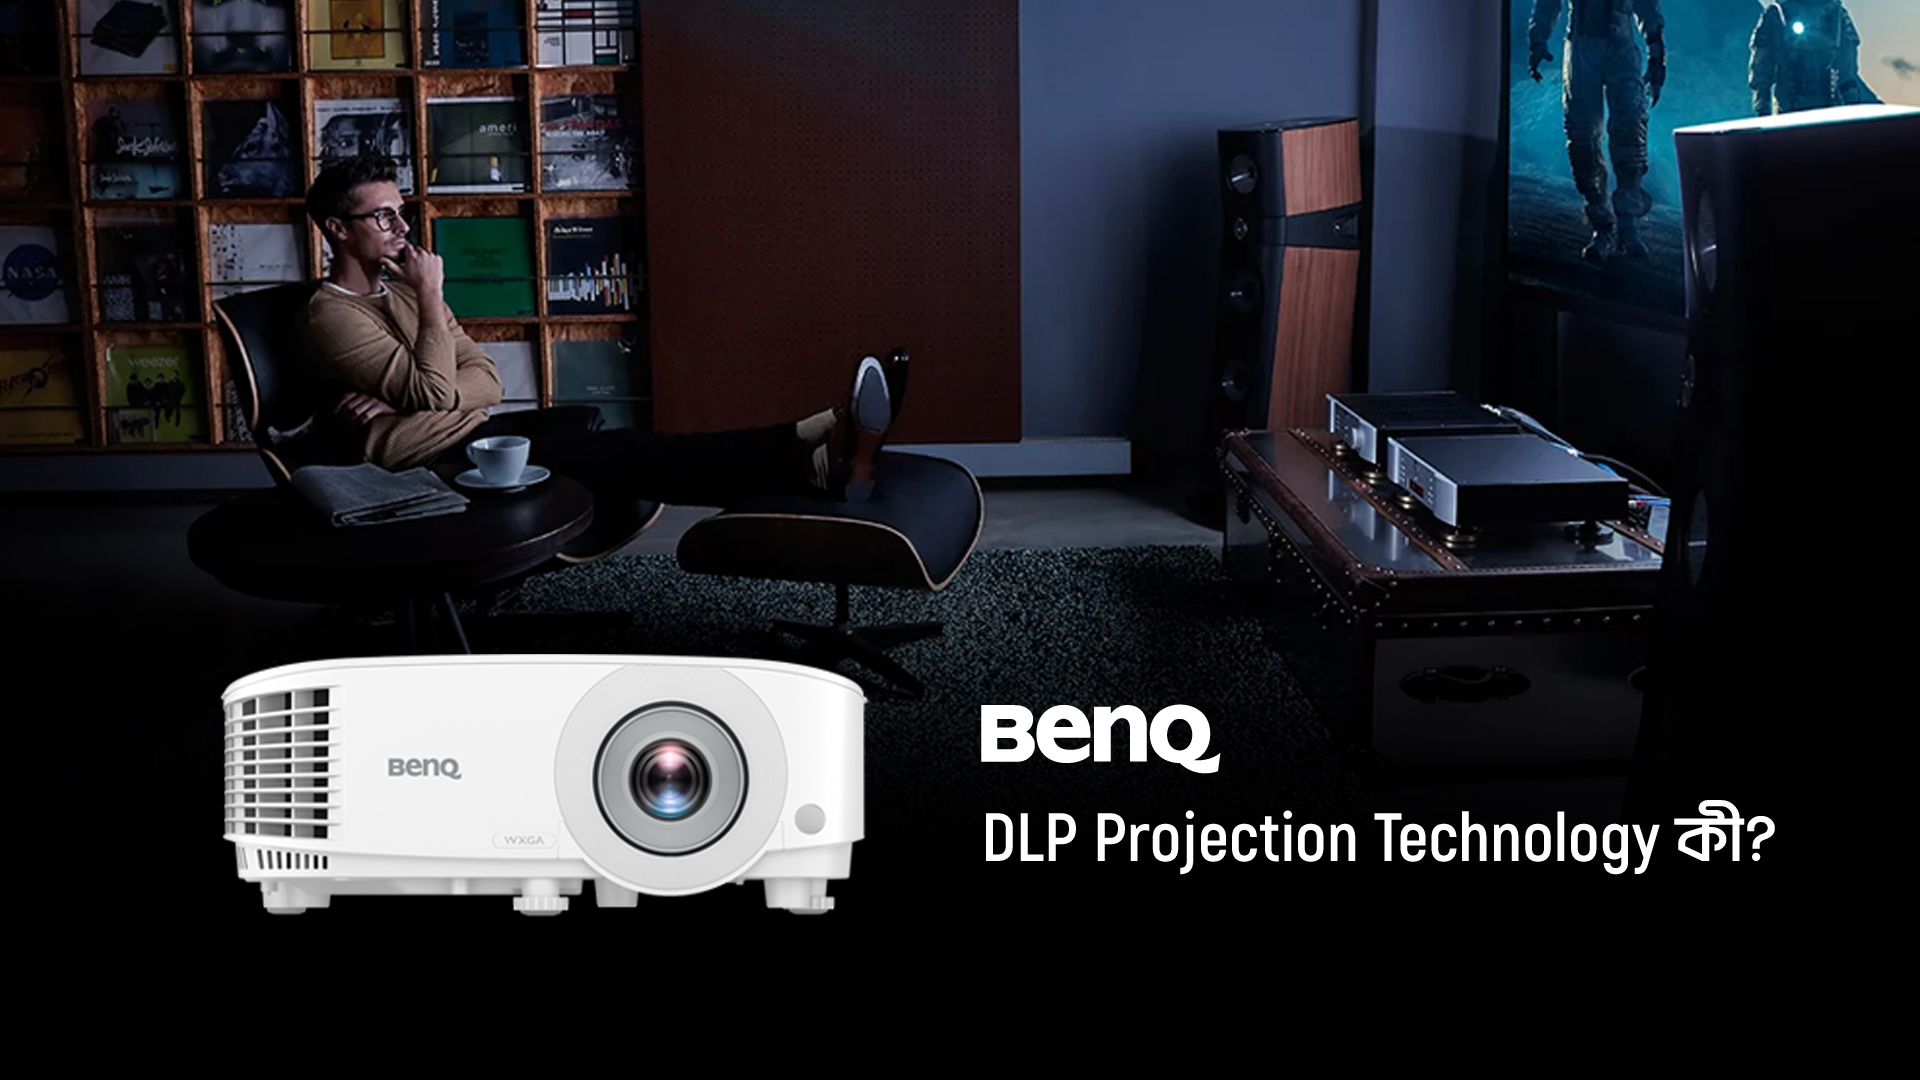 BenQ DLP Projection Technology কী? জেনে নিন এর বিশেষত্ব।